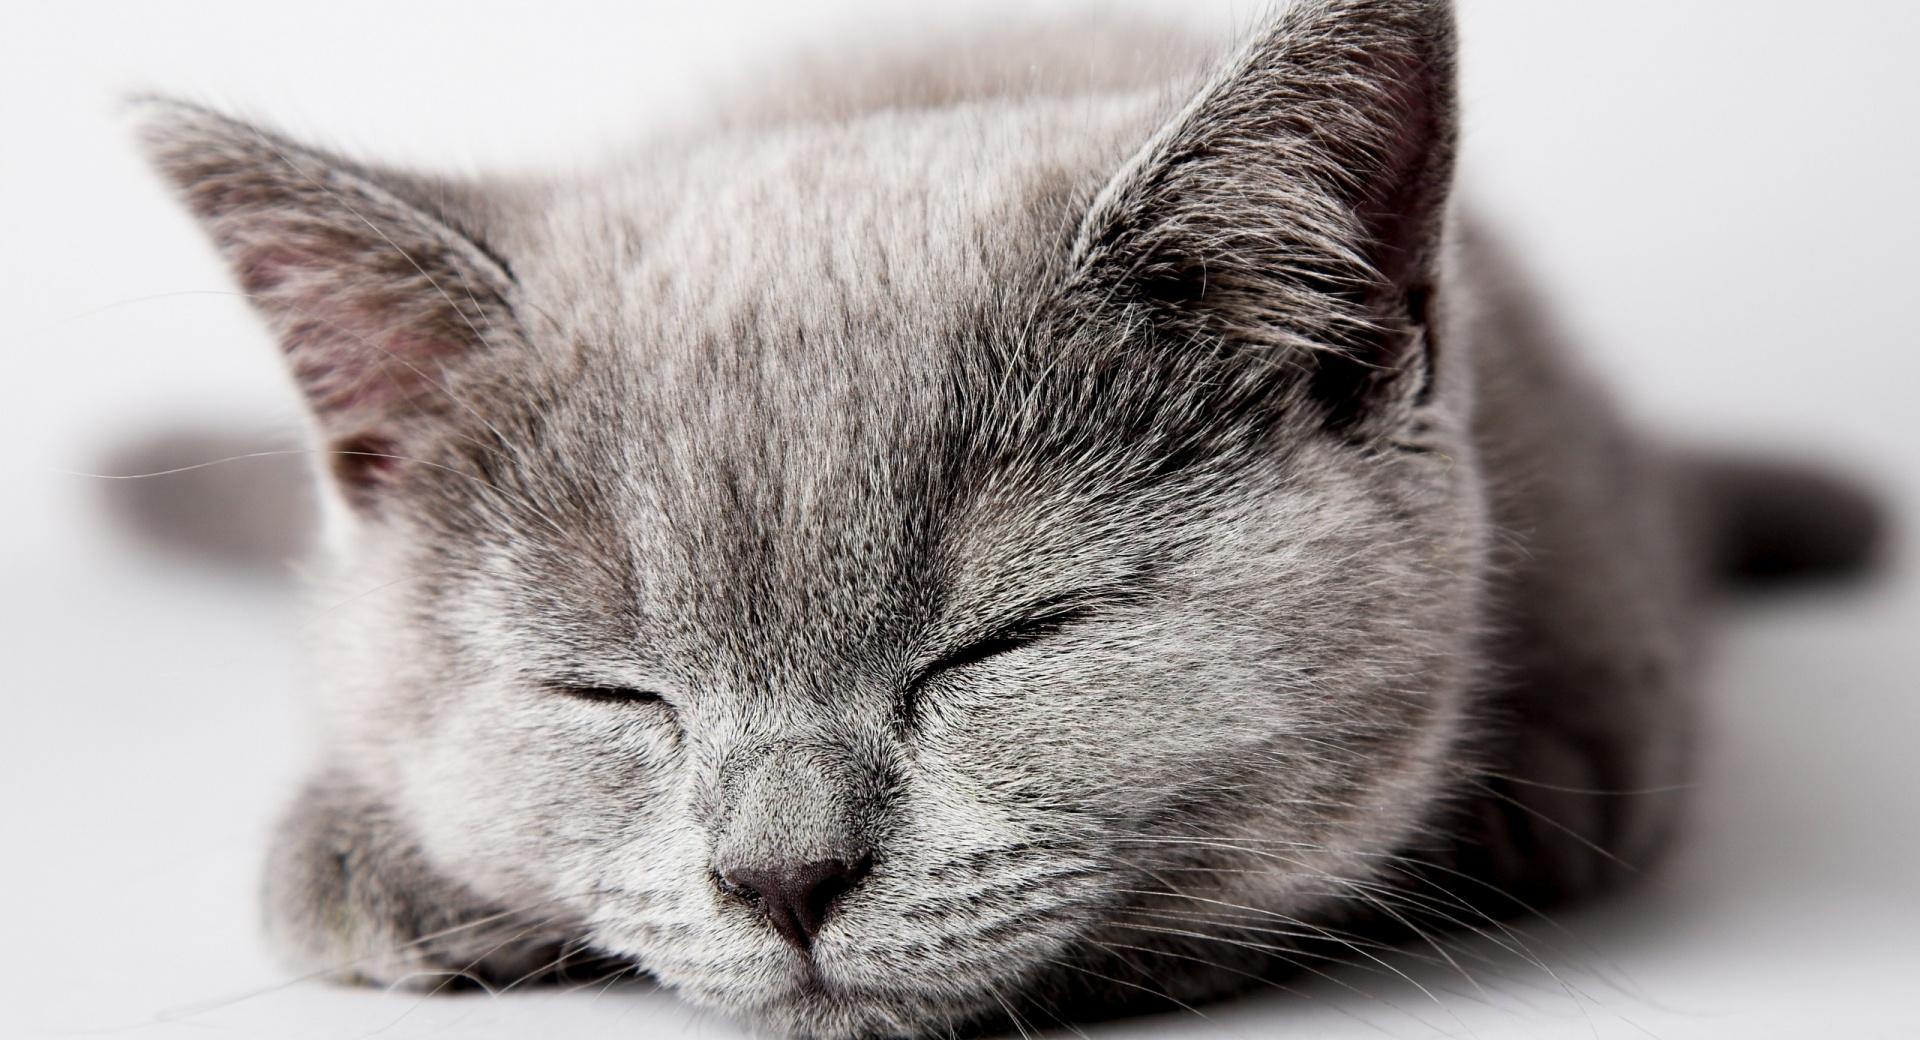 Sleepy Grey Kitten at 1024 x 1024 iPad size wallpapers HD quality